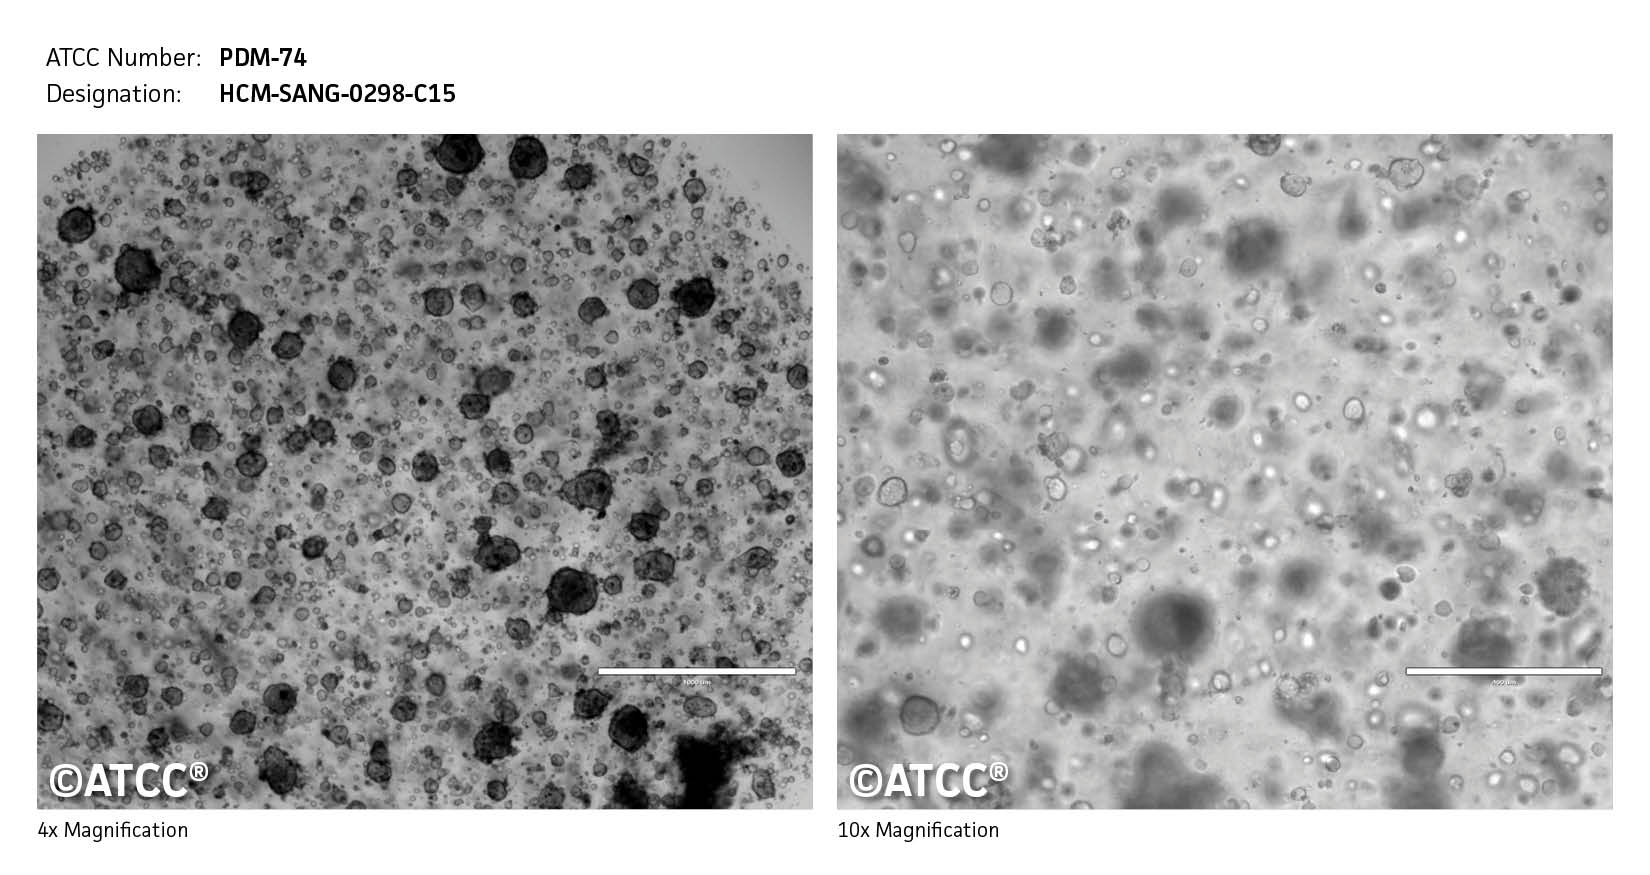 ATCC PDM-74 Cell Micrograph